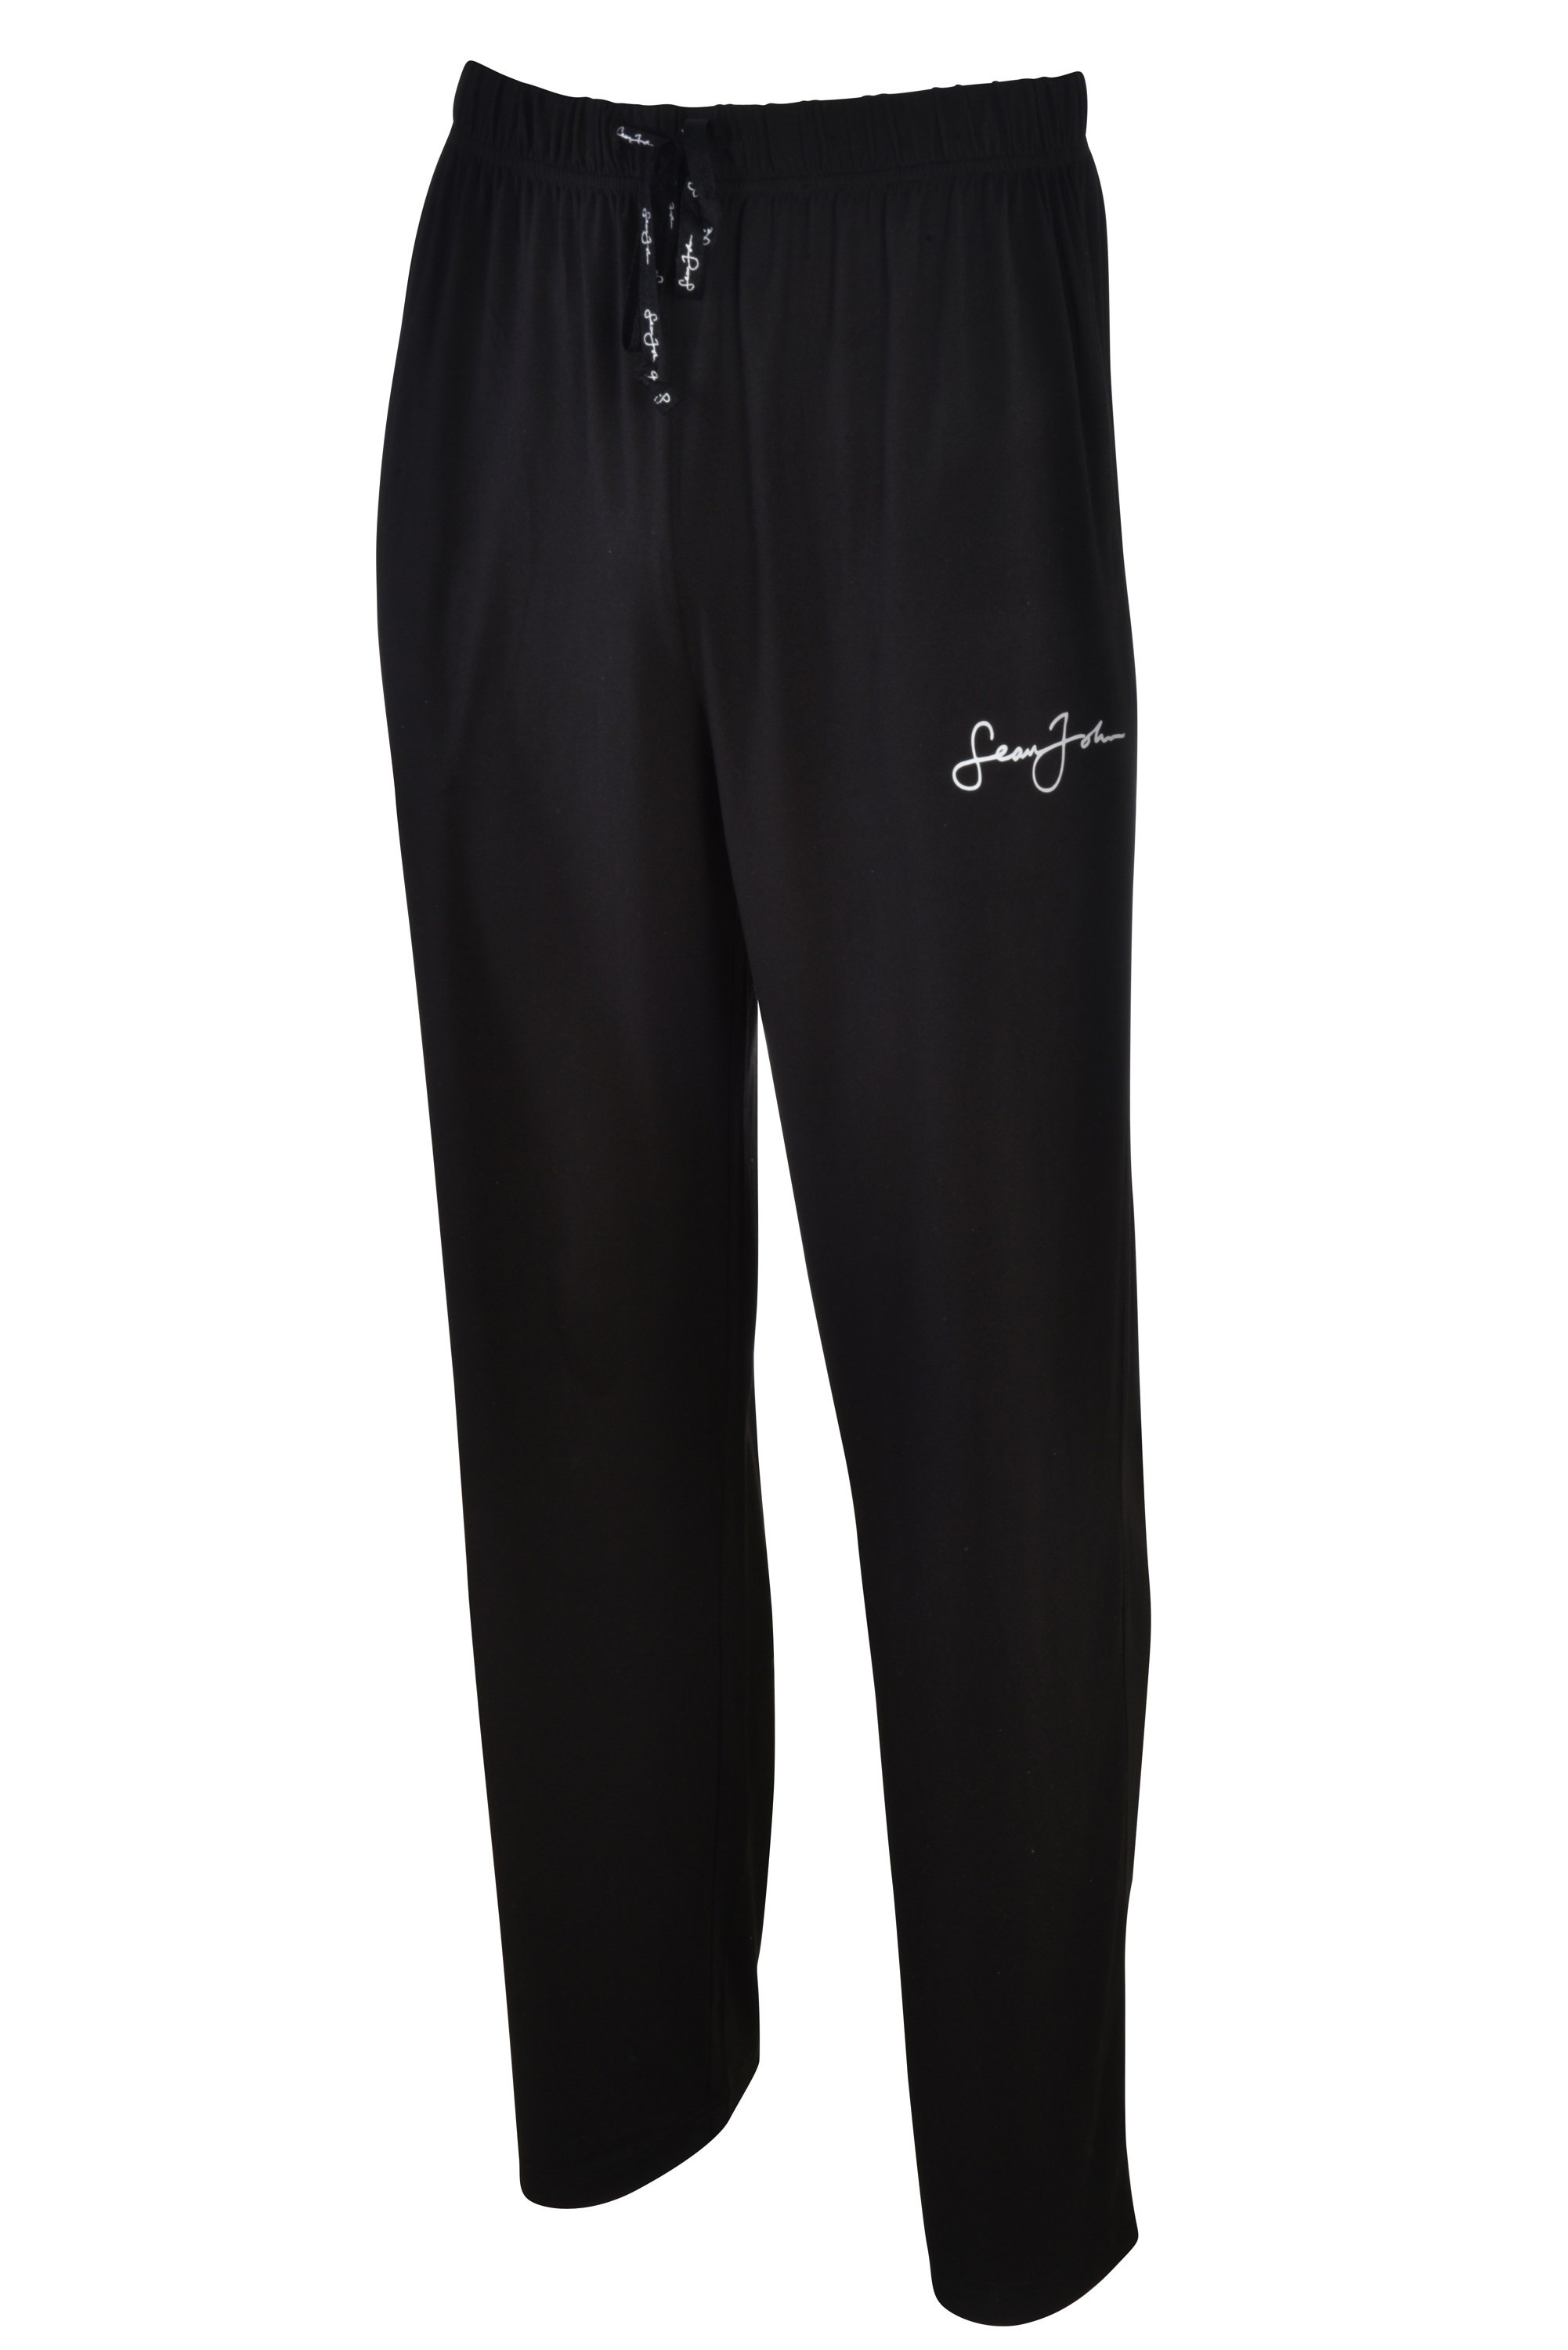 Sean John Mens Lounge Shirt or Pants Super Soft Jersey VNeck TShirt Sleep Pajama 